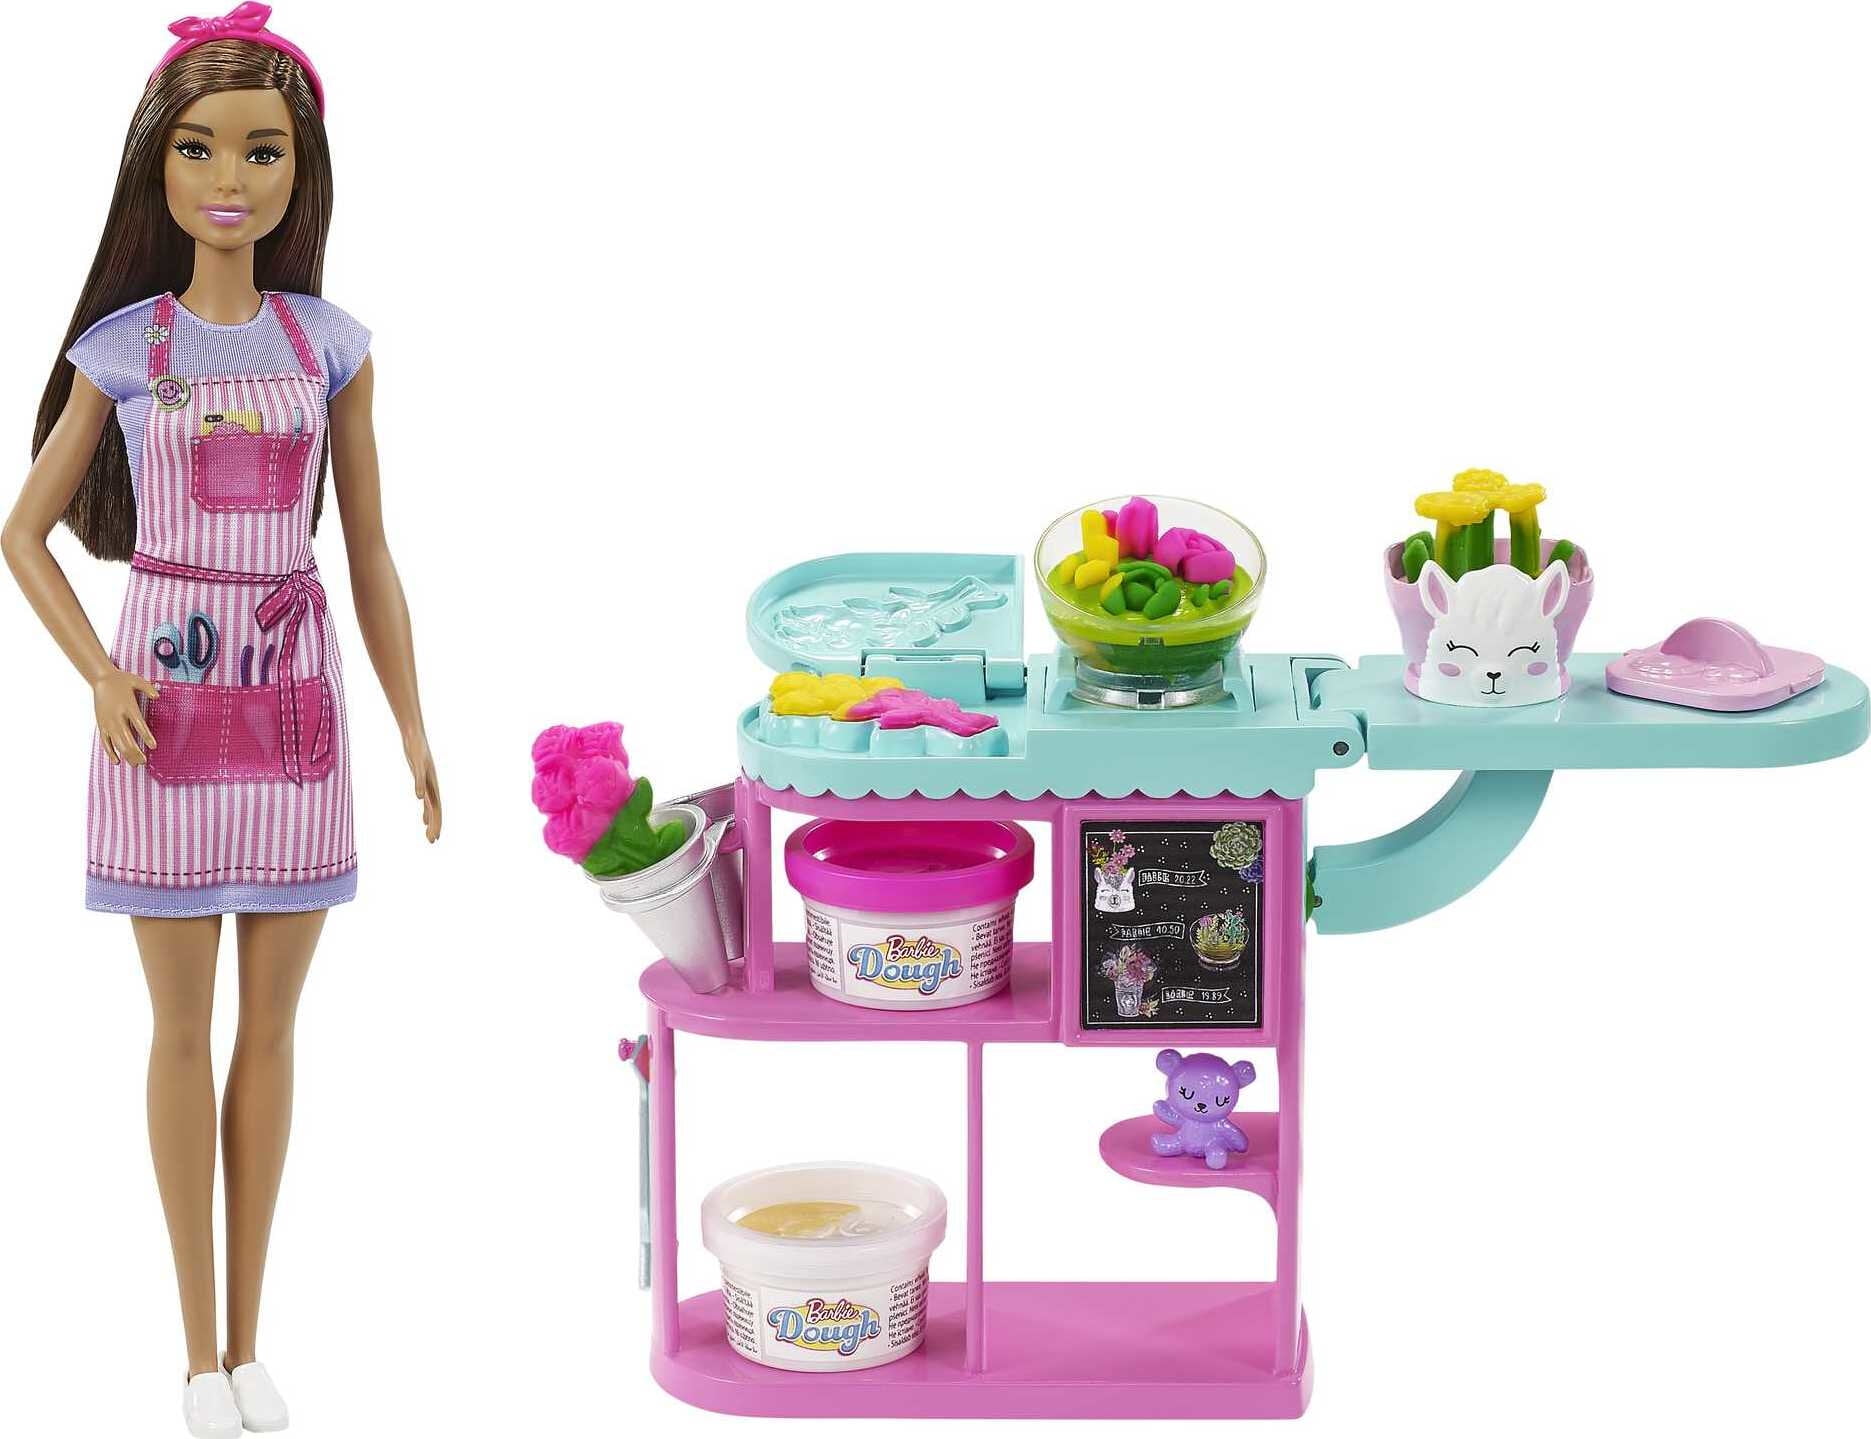 Barbie set of 6 accessories– My Cute Cheap Store